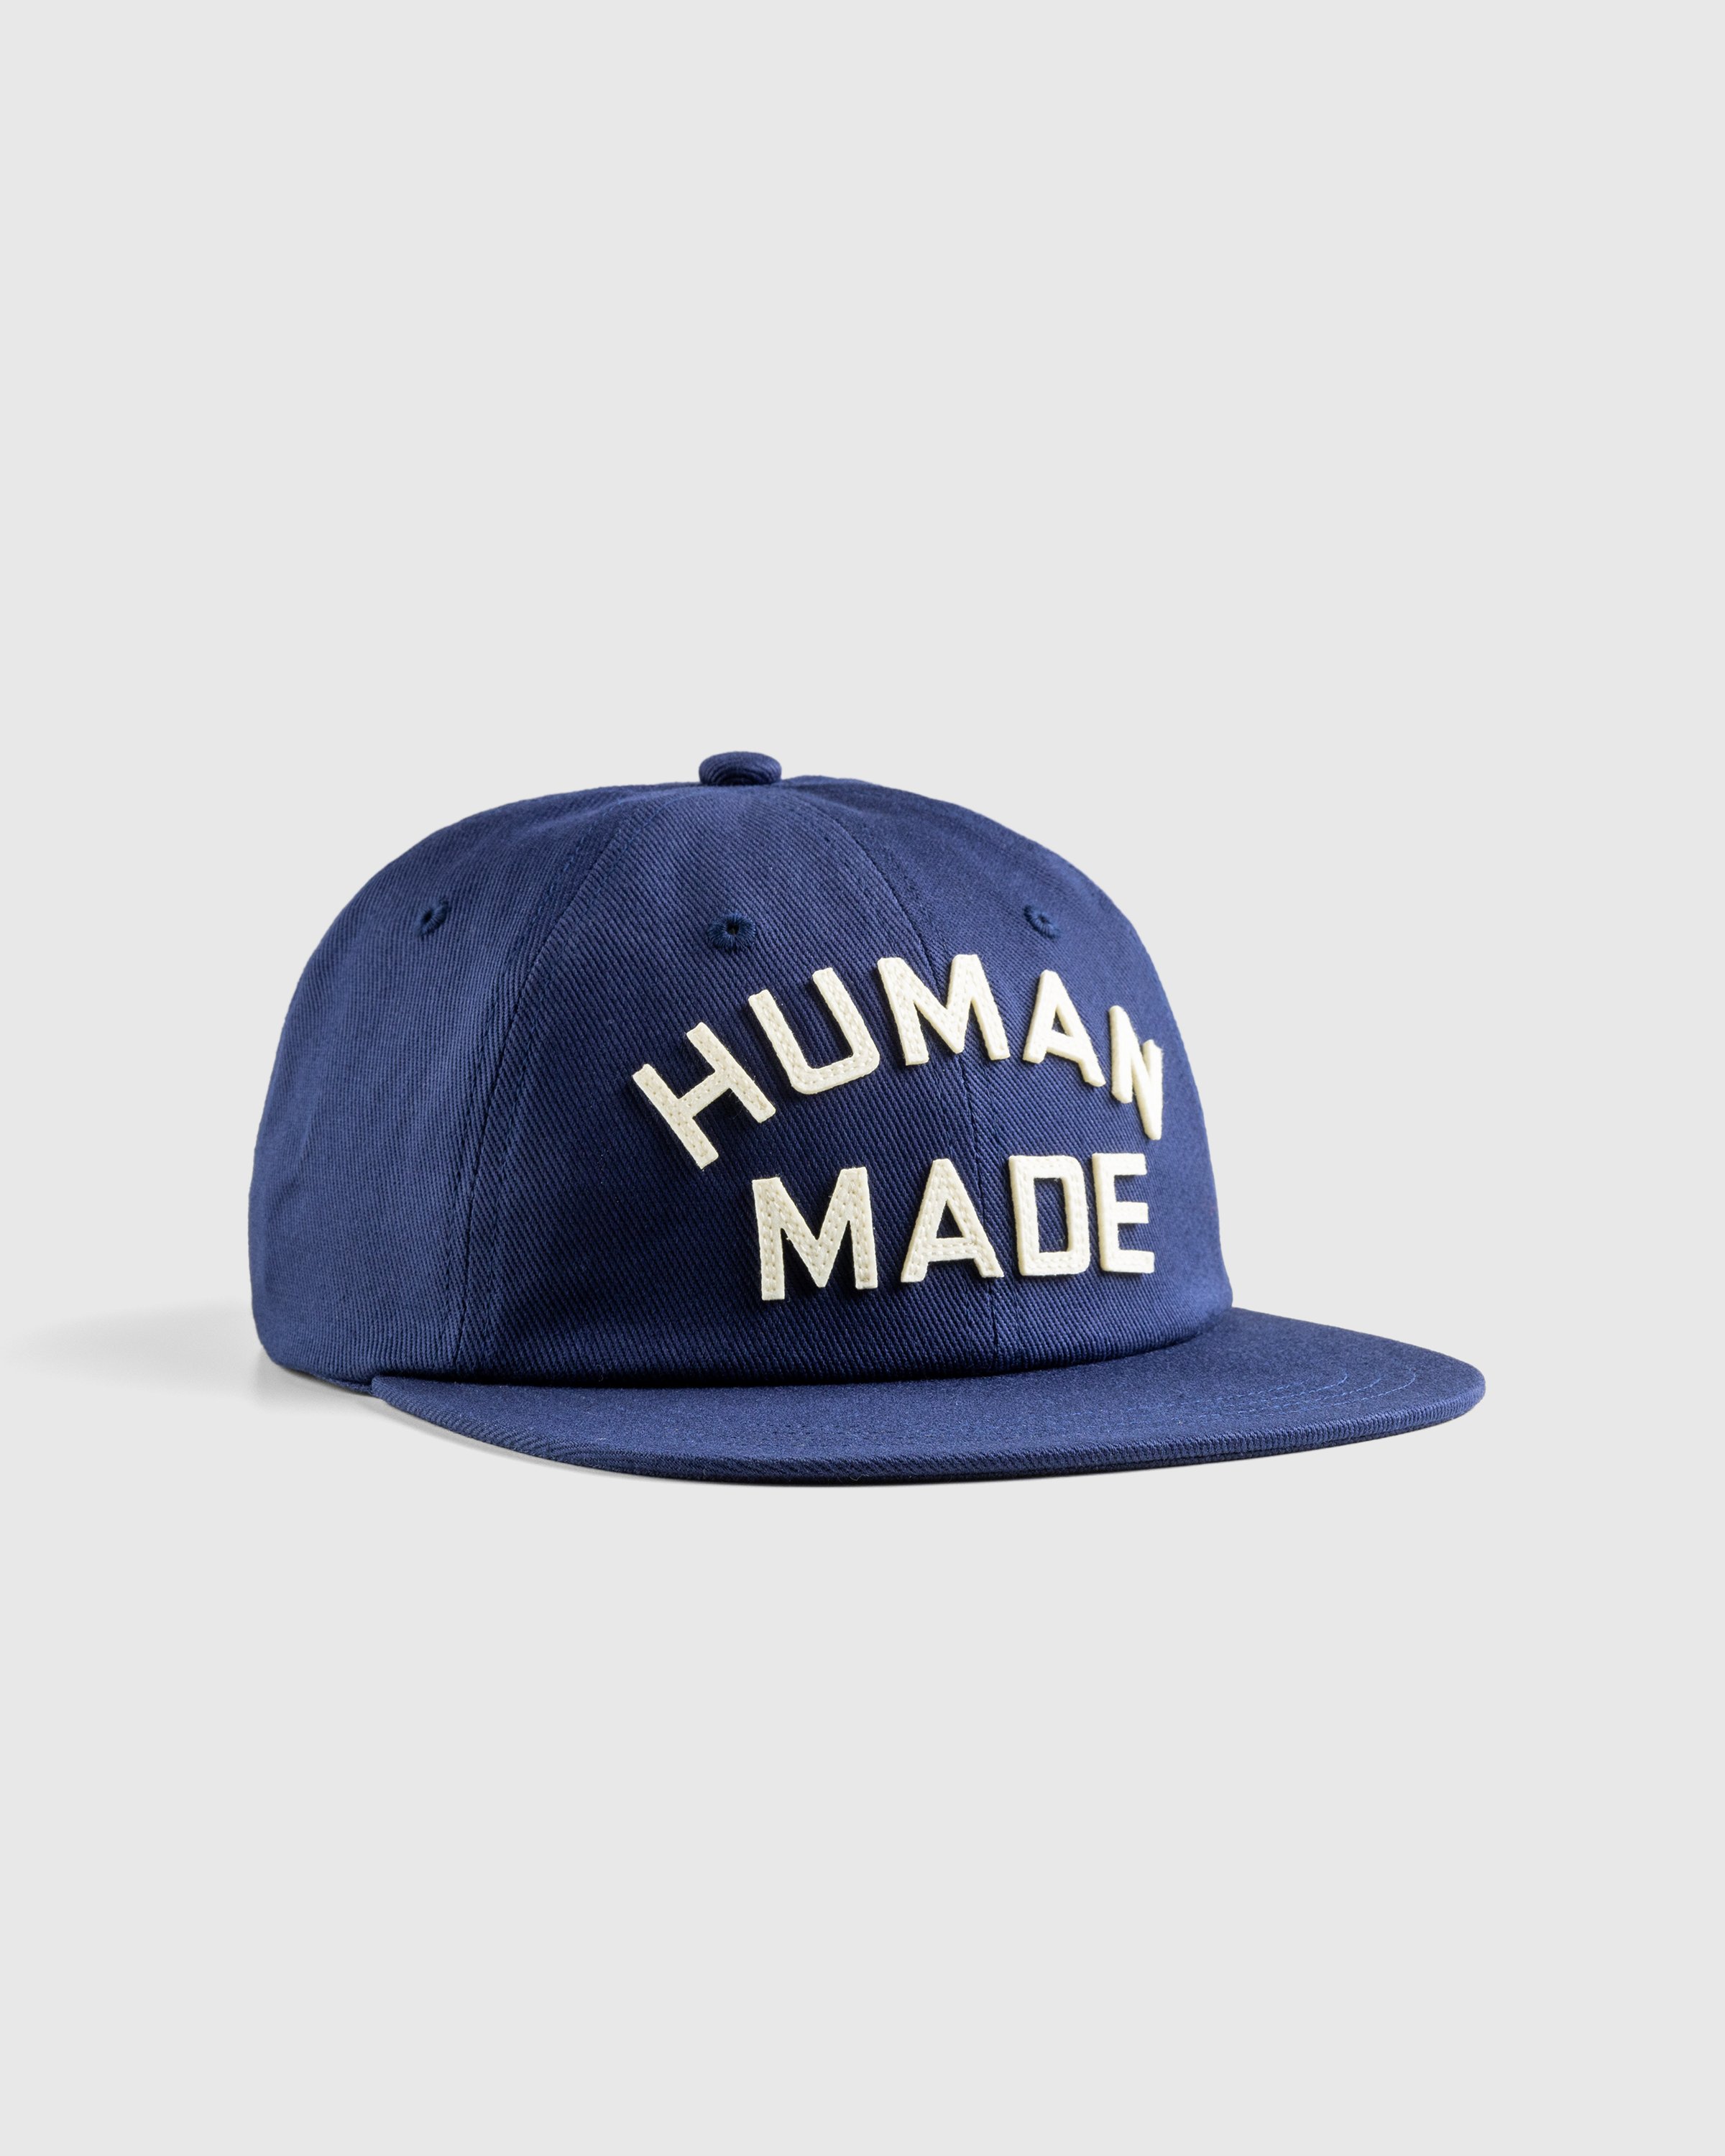 Human Made - BASEBALL CAP NAVY - Accessories - Blue - Image 1